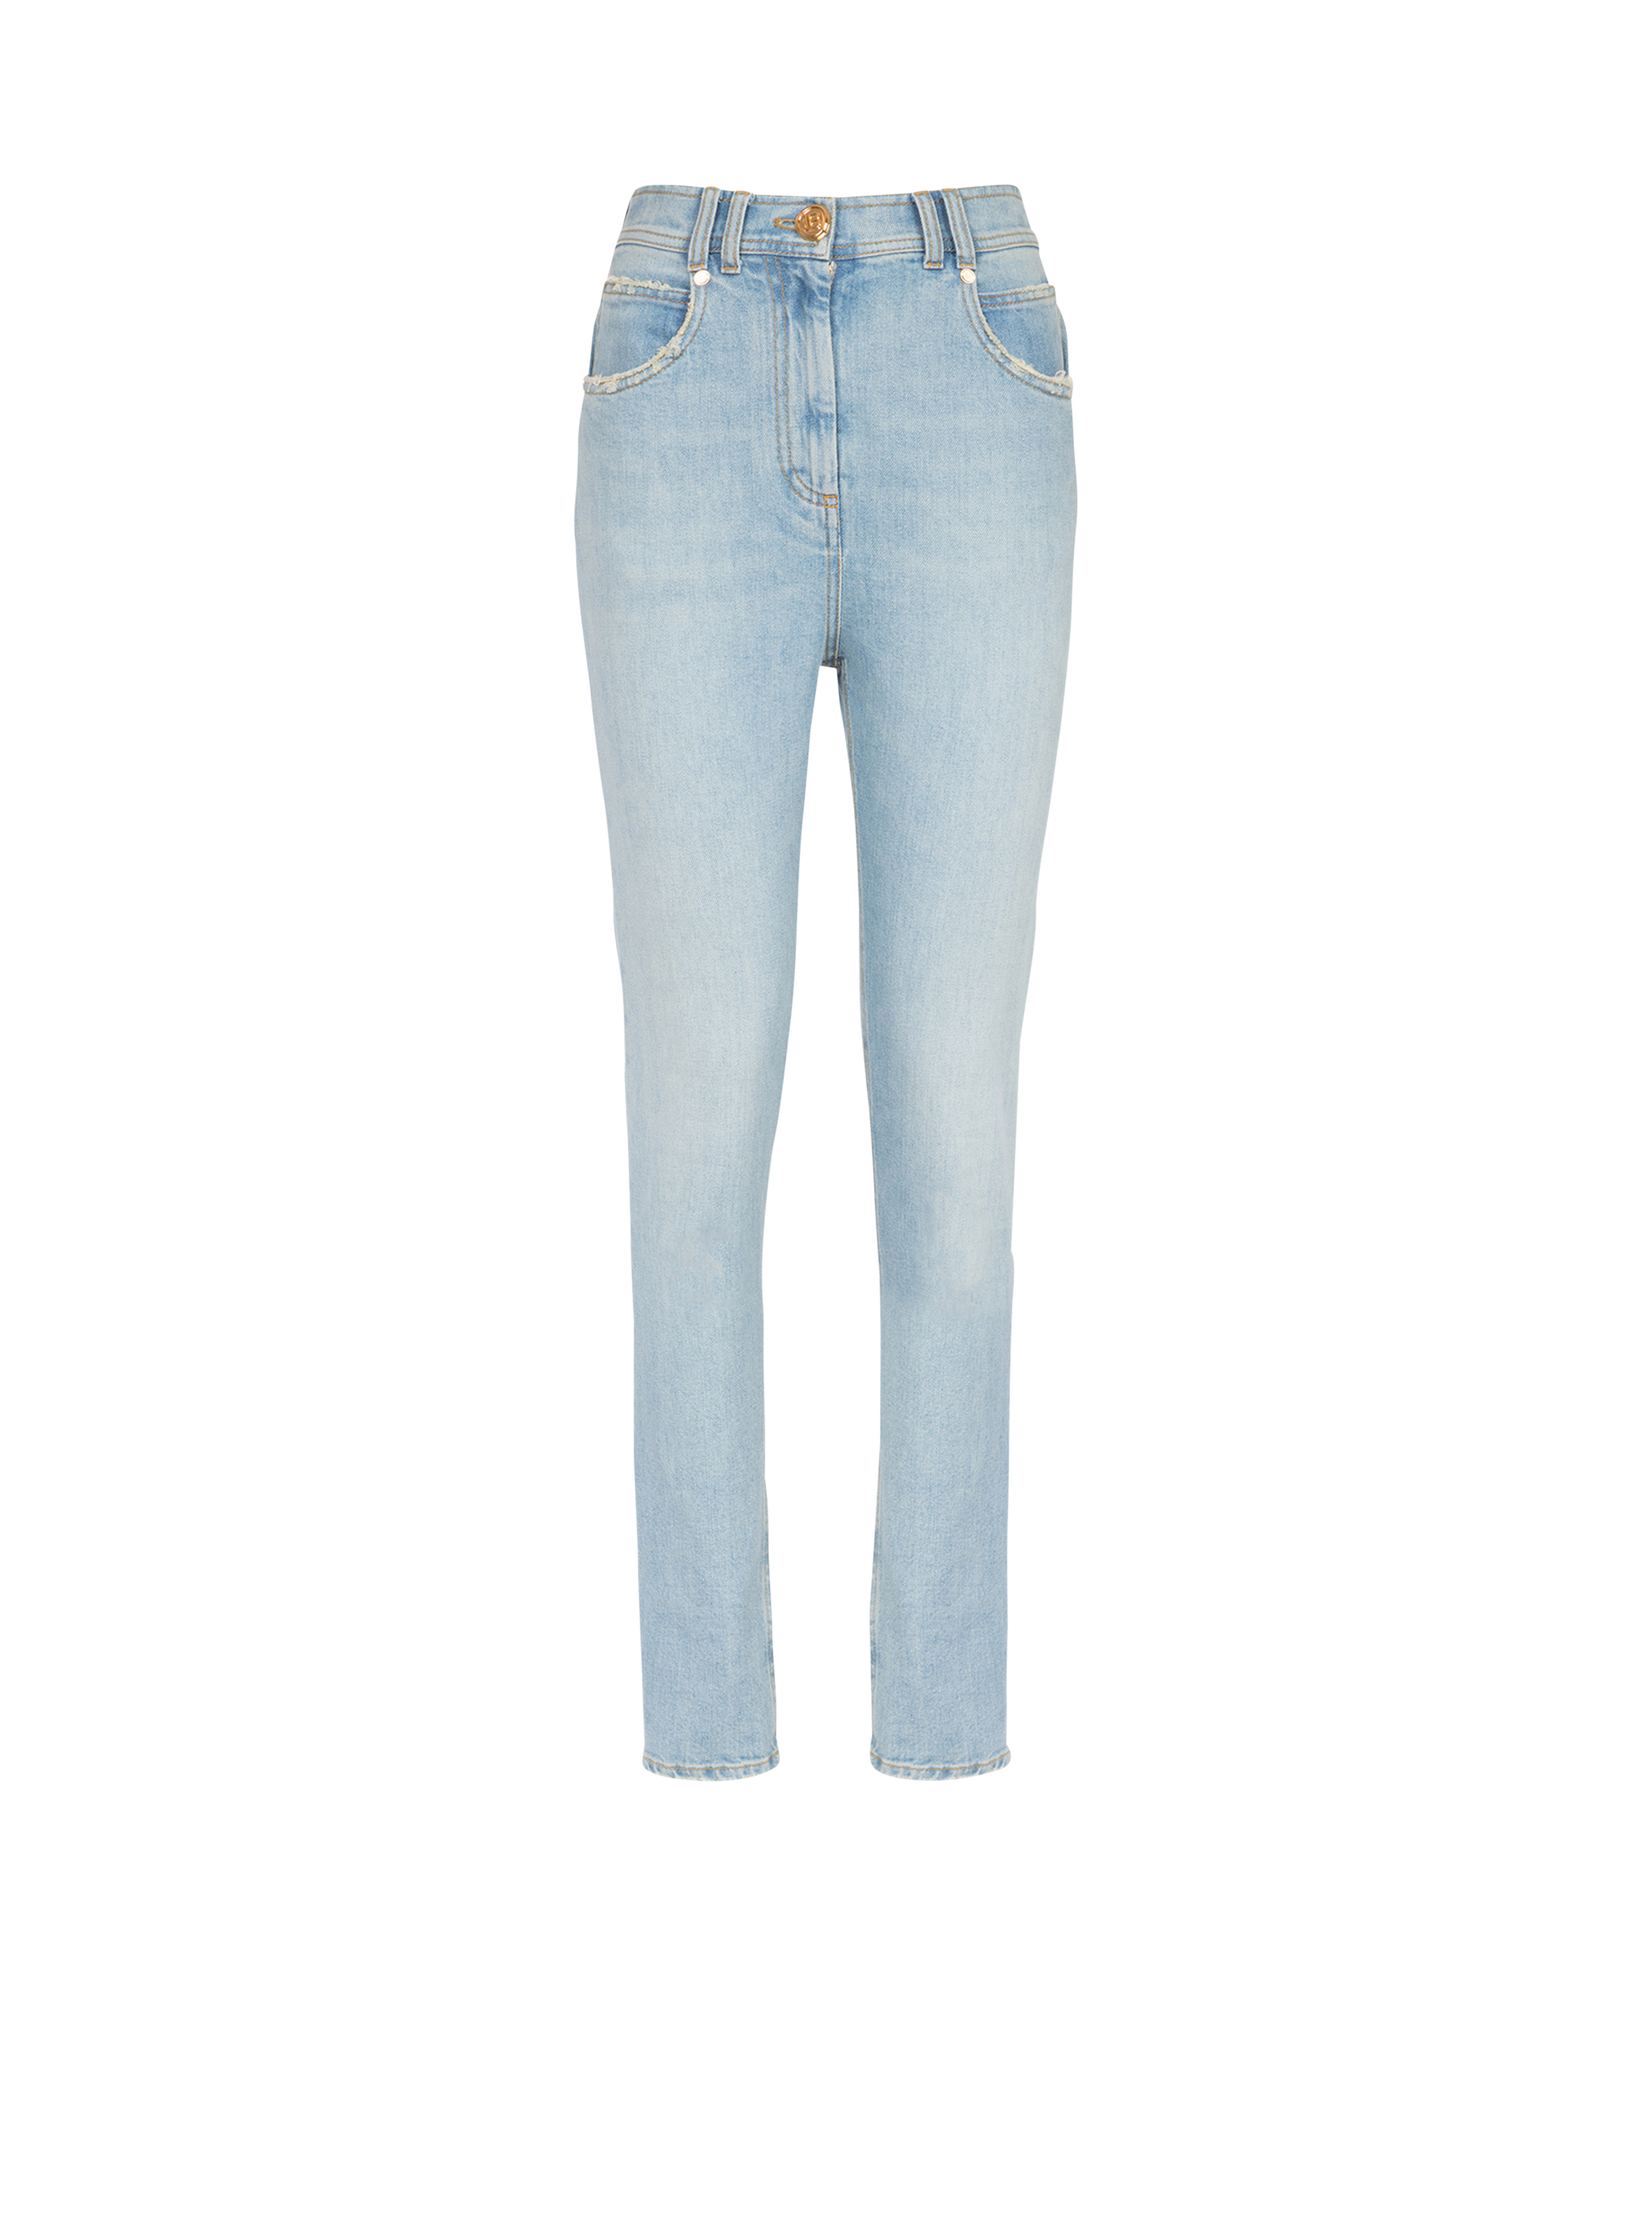 Skinny Jeans im Öko-Design, blau